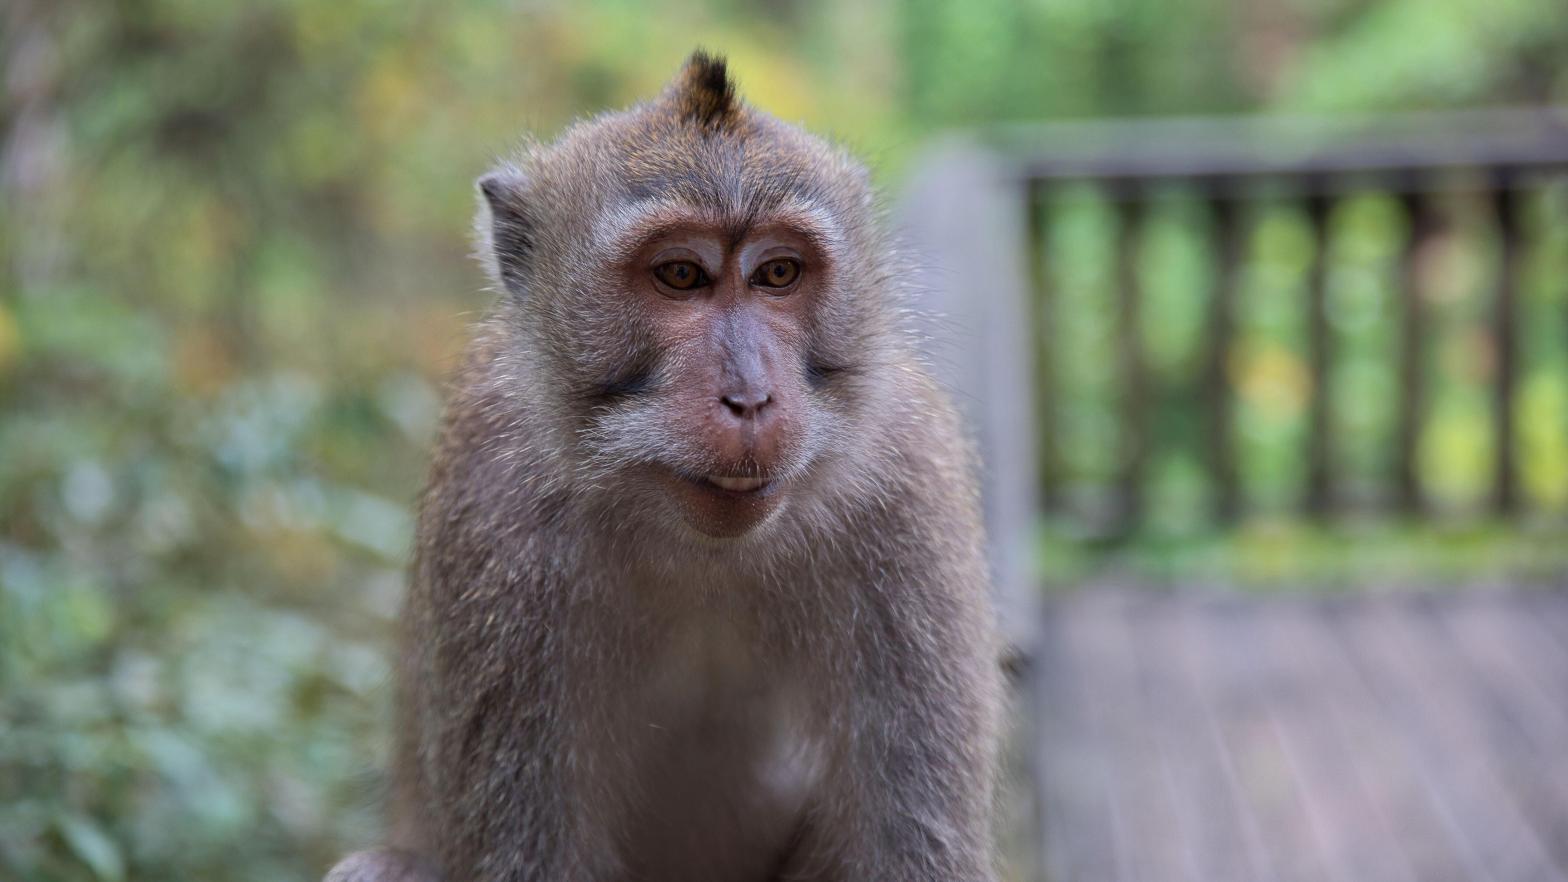 A young cynomolgus monkey. (Image: mobrafotografie, Shutterstock)